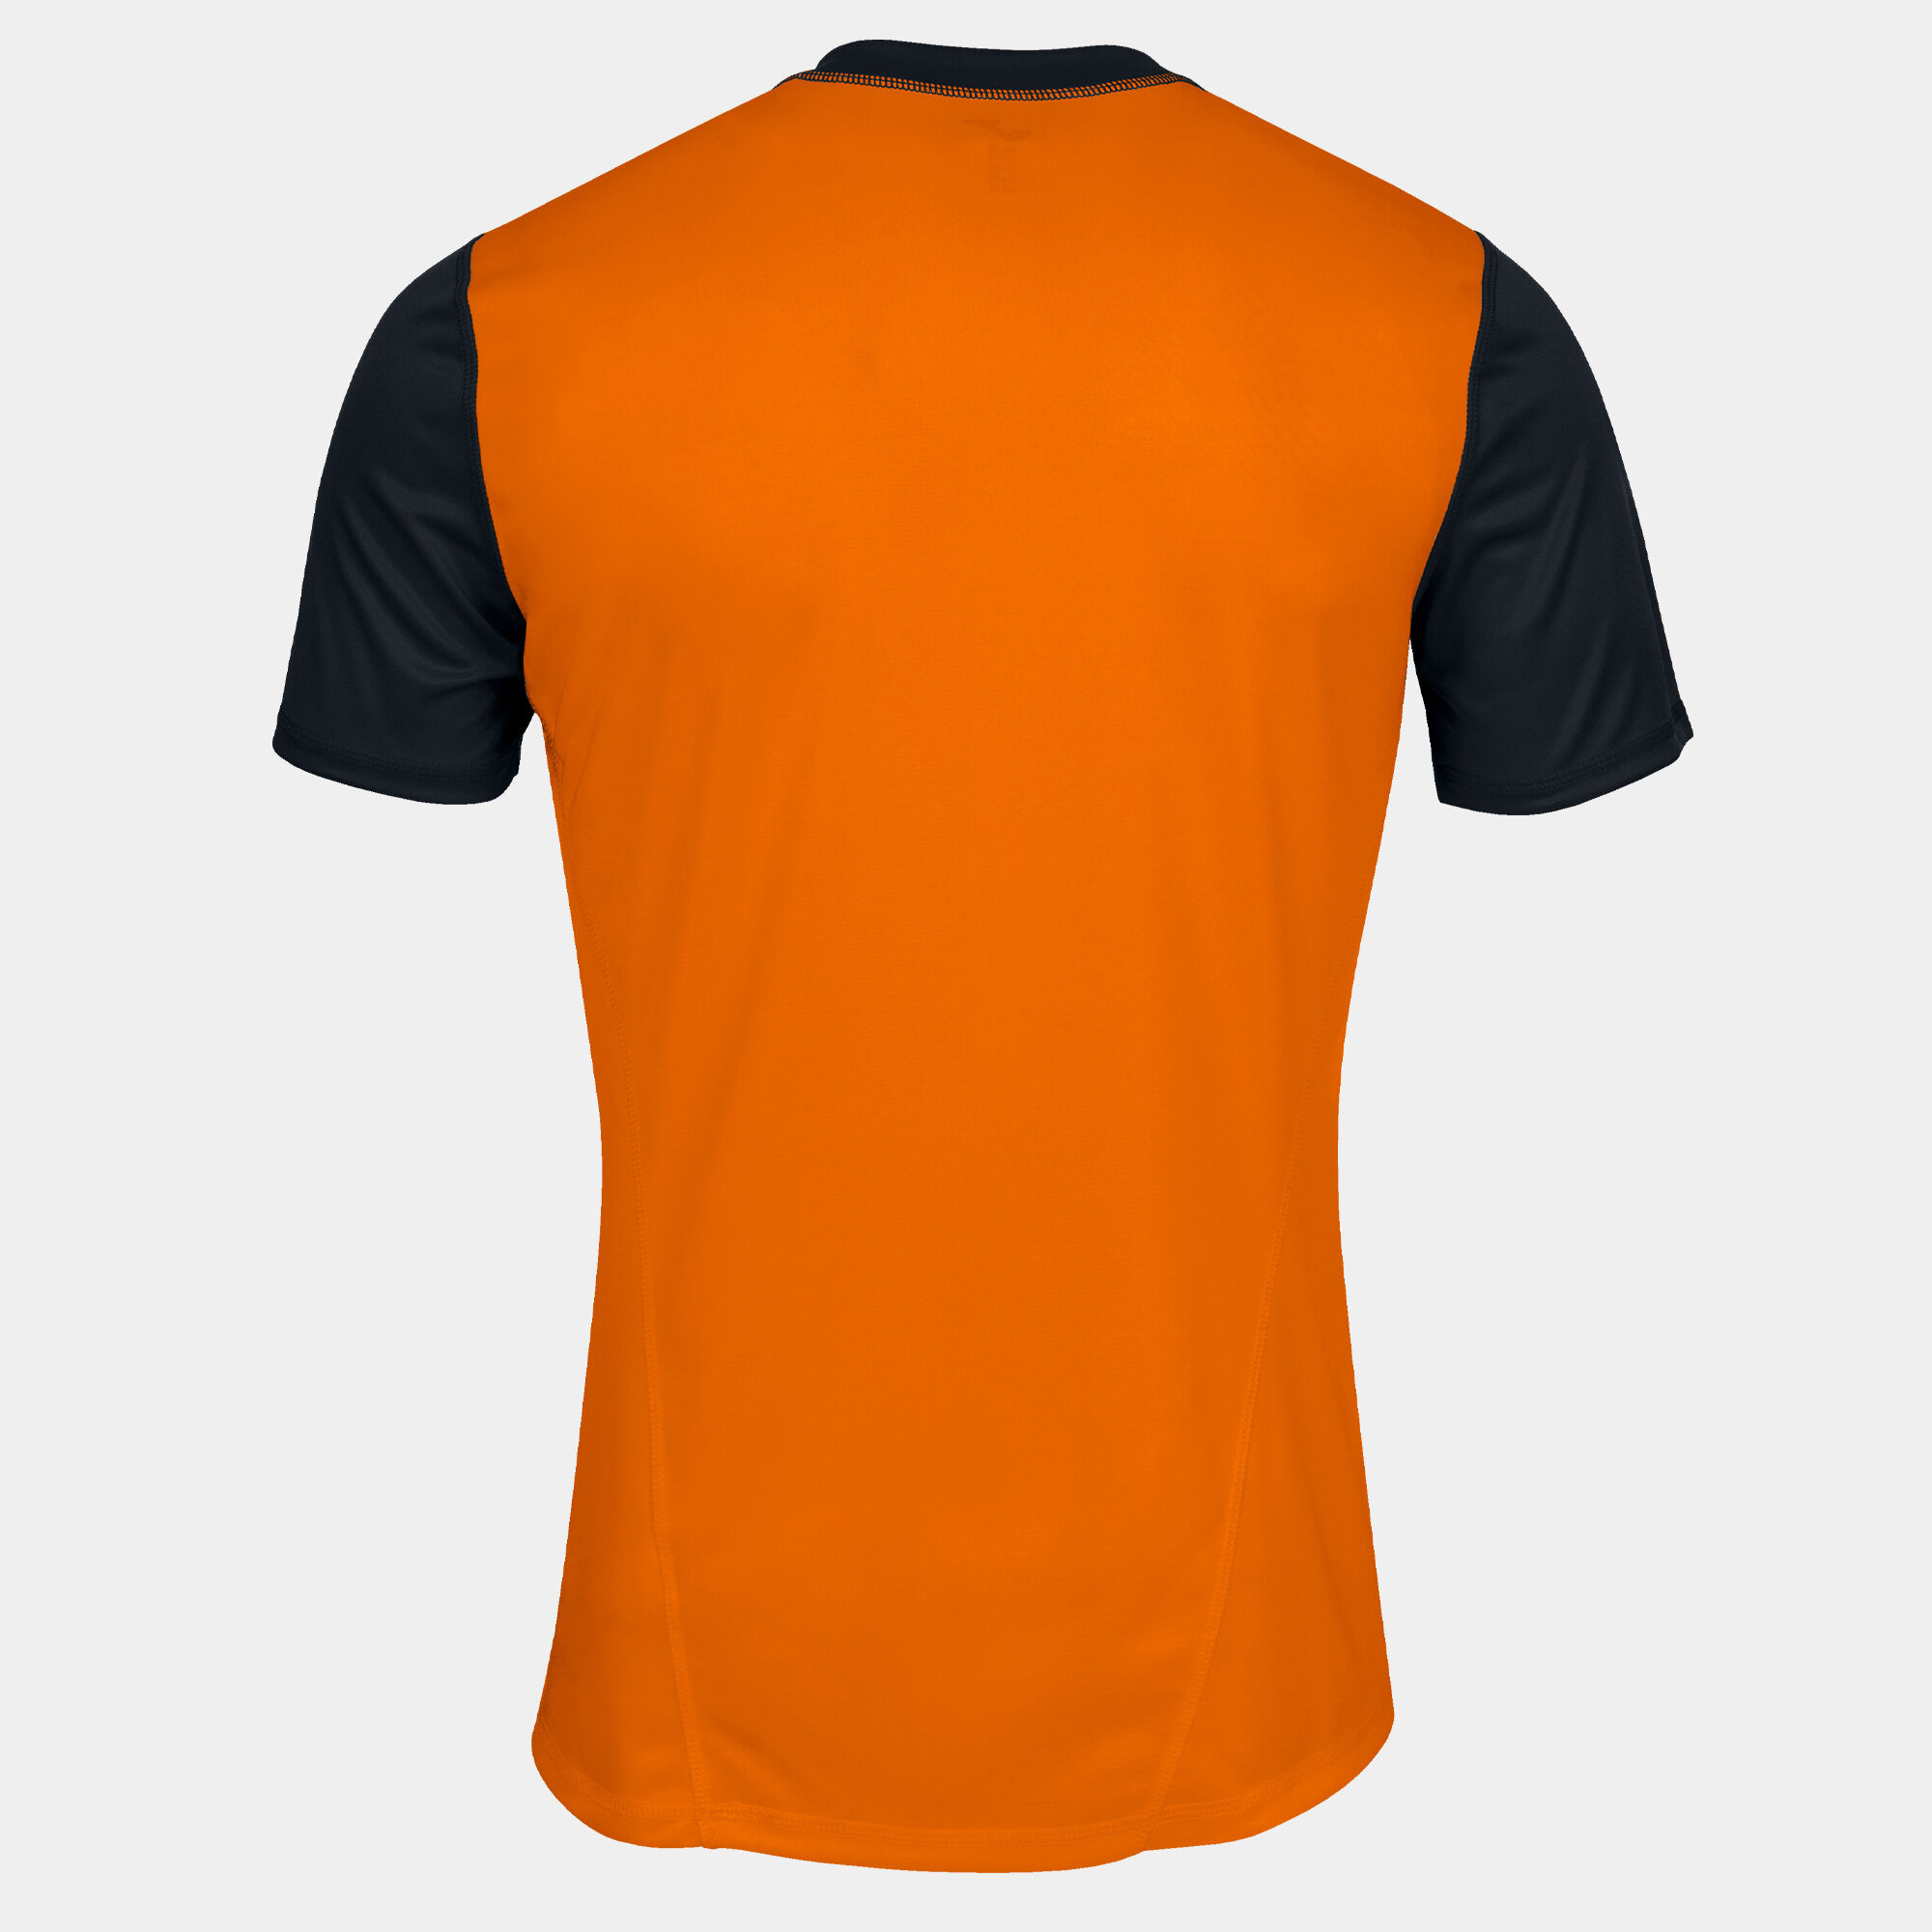 Camiseta manga corta hombre Hispa IV naranja negro